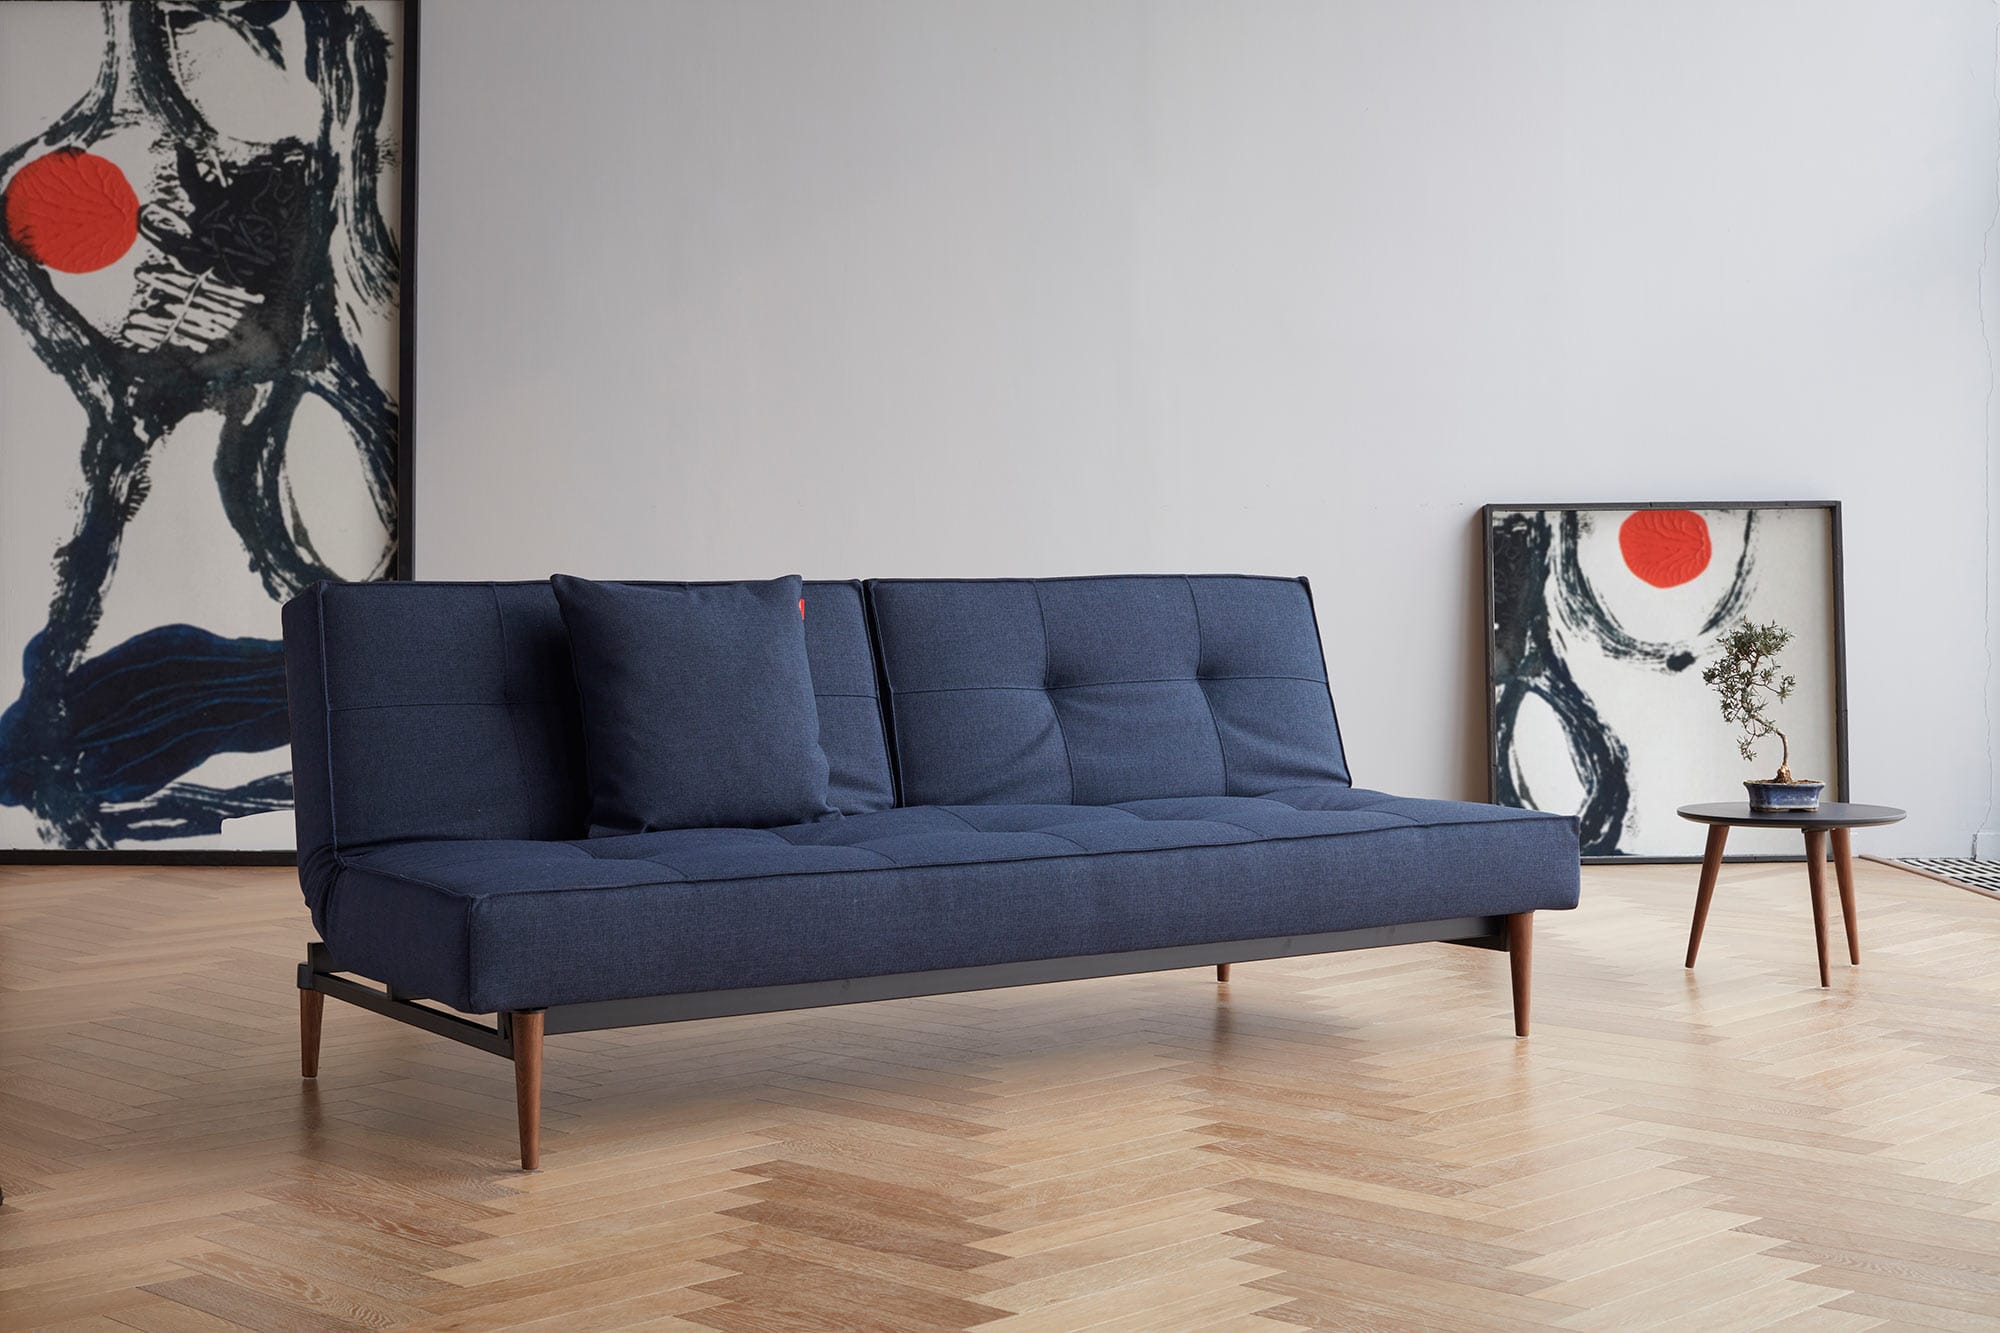 Splitback Sofa Bed Innovation Blue w/Black by Legs Mixed Dance Eik